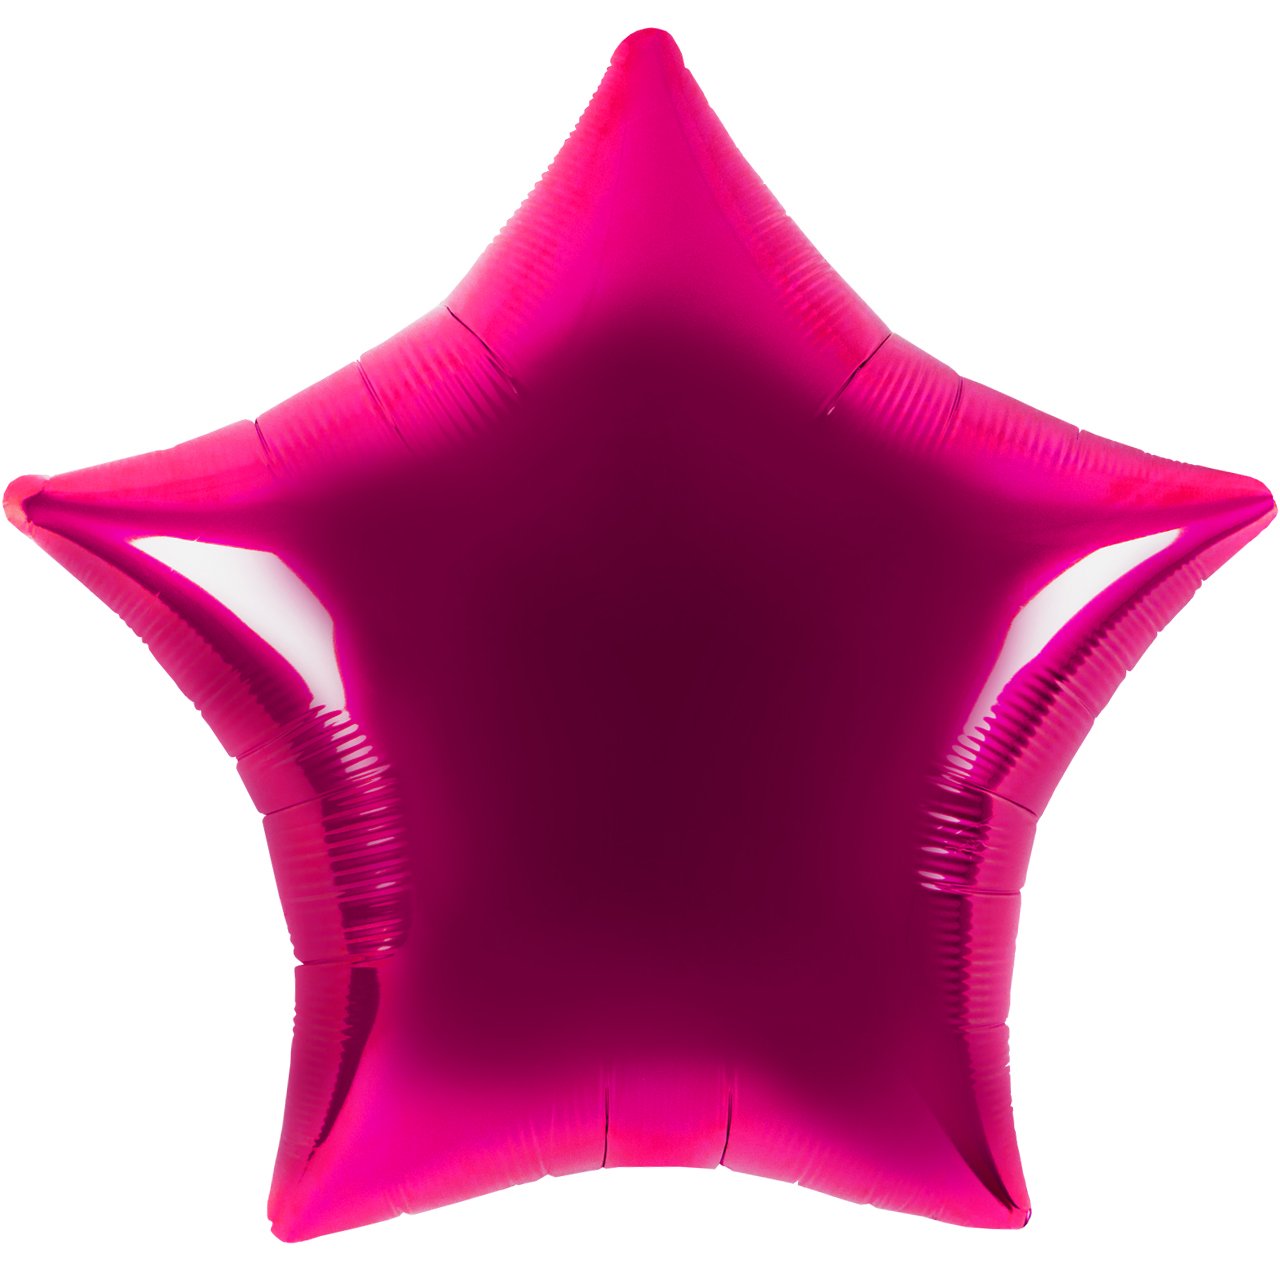 Helium Ballon - Sterne (Personalisiert)